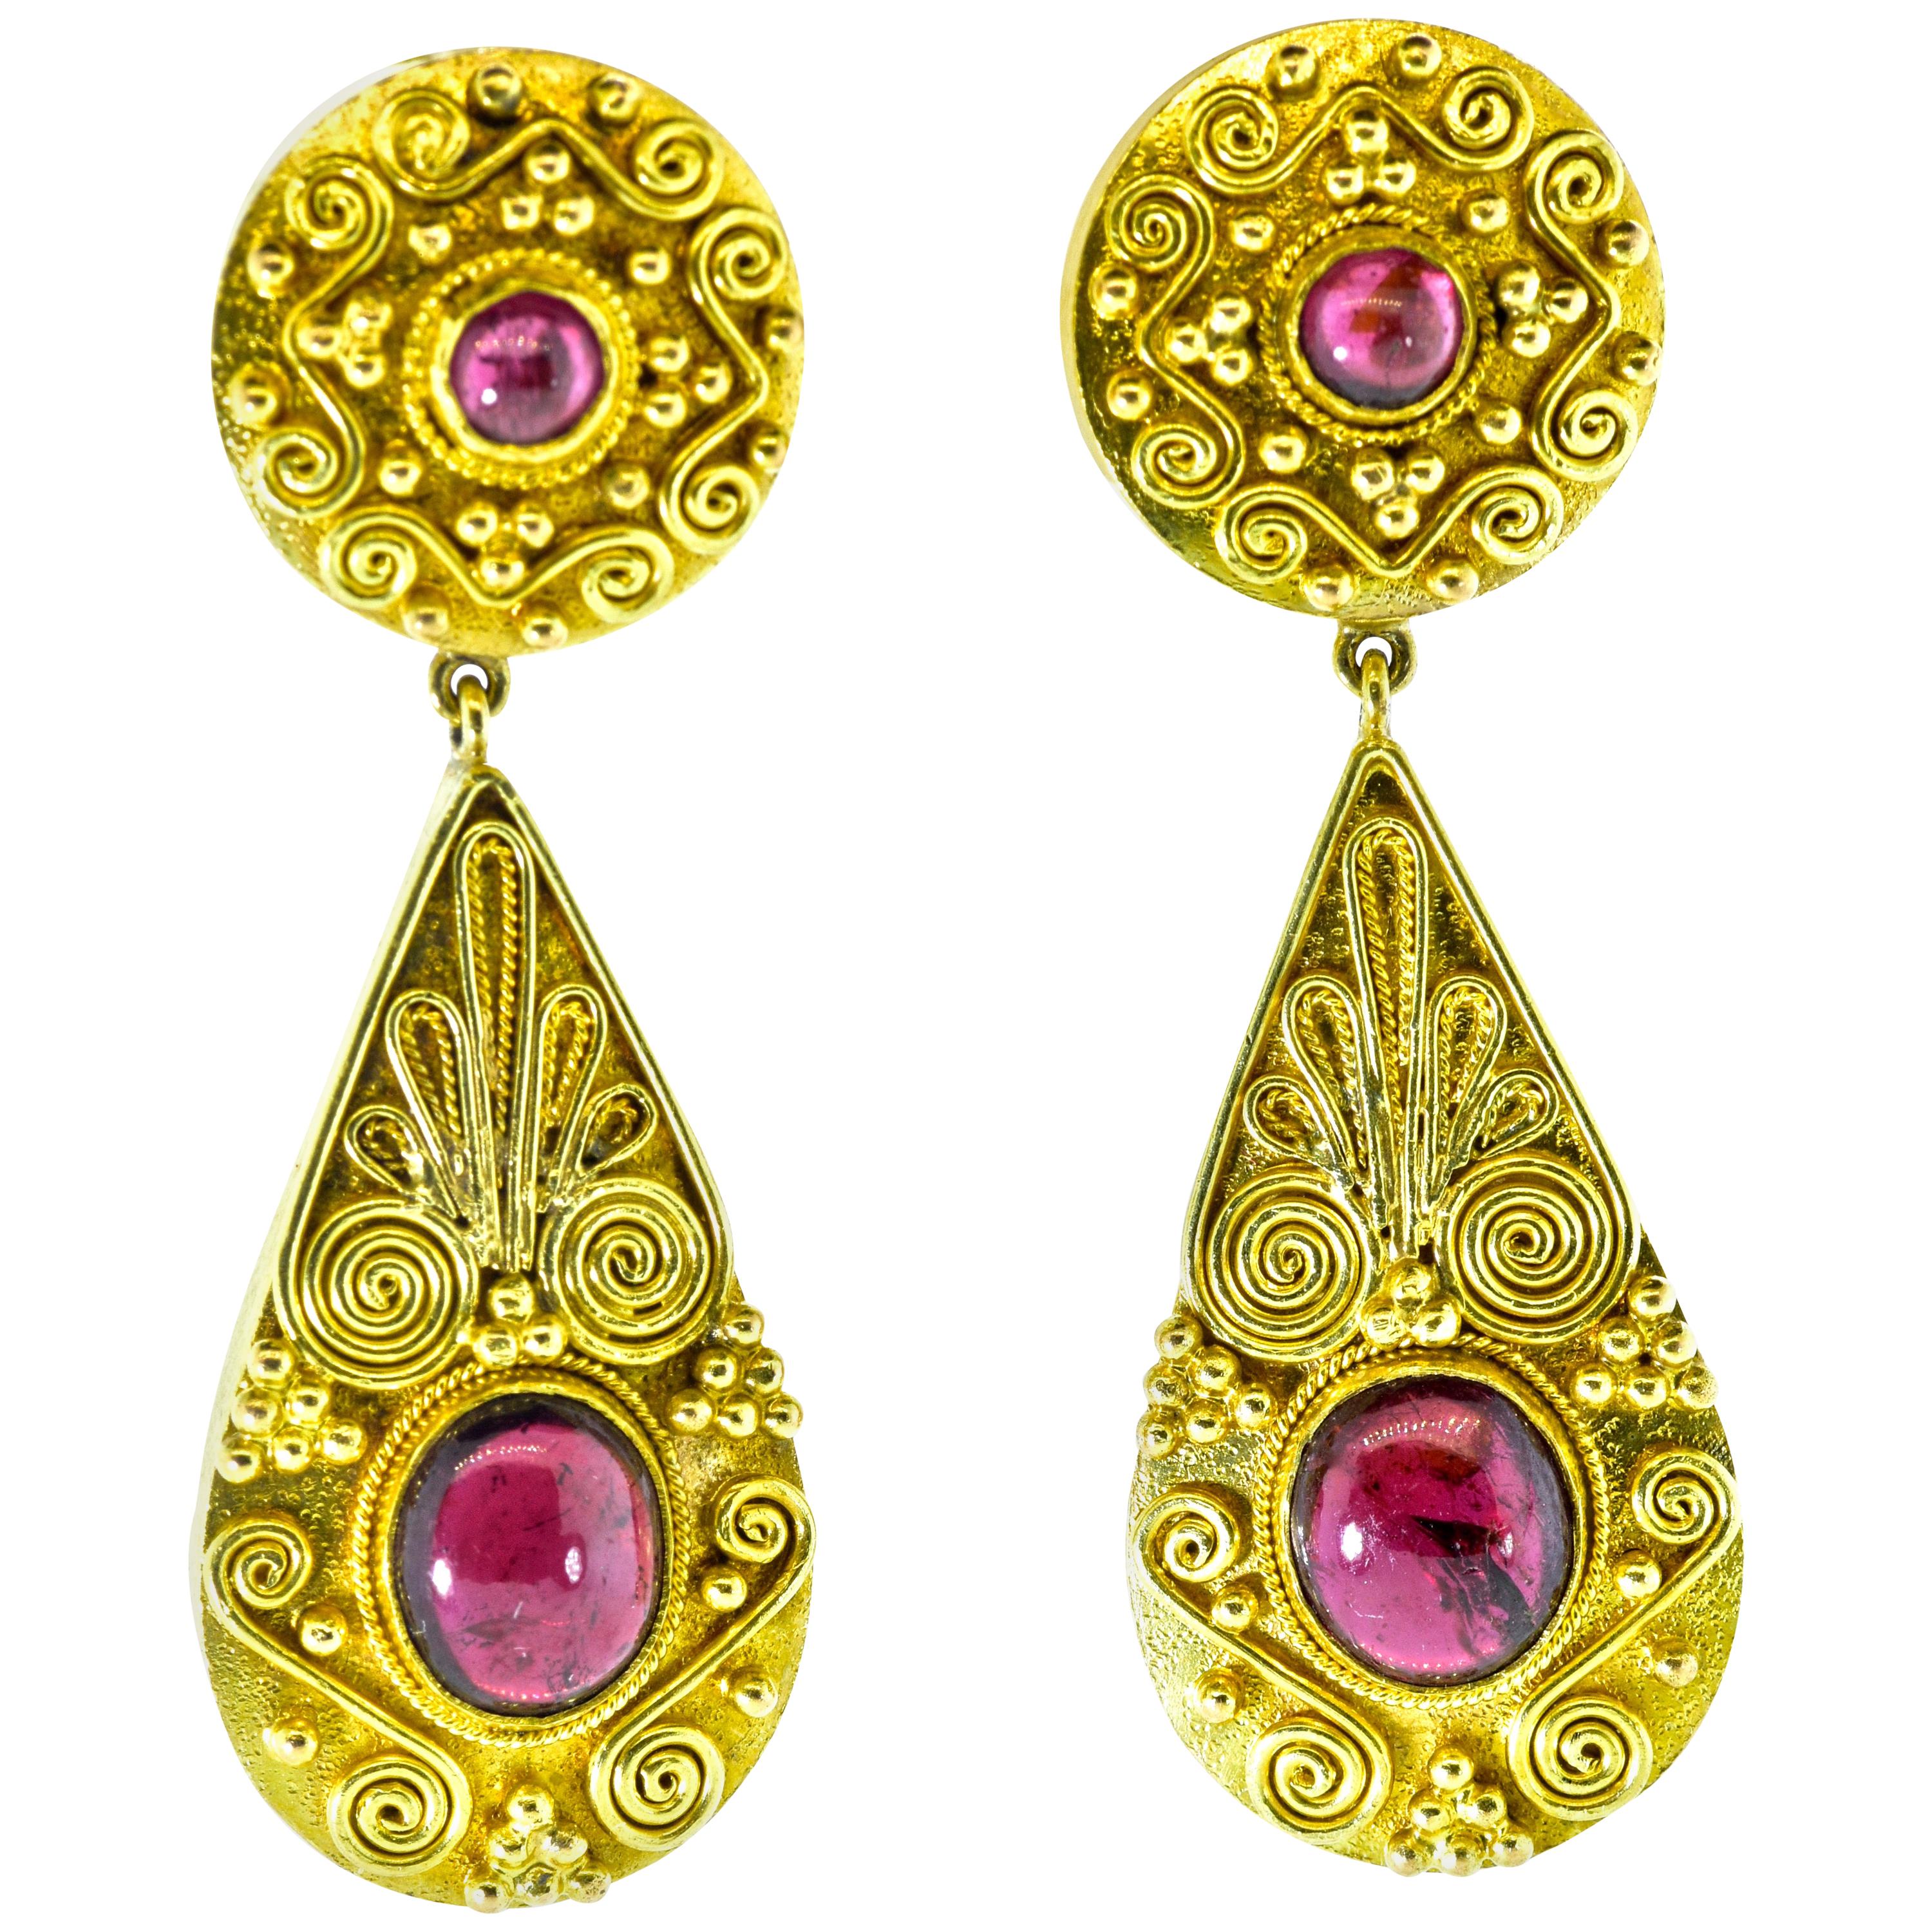 Gold and Garnet Pendant Style Earrings